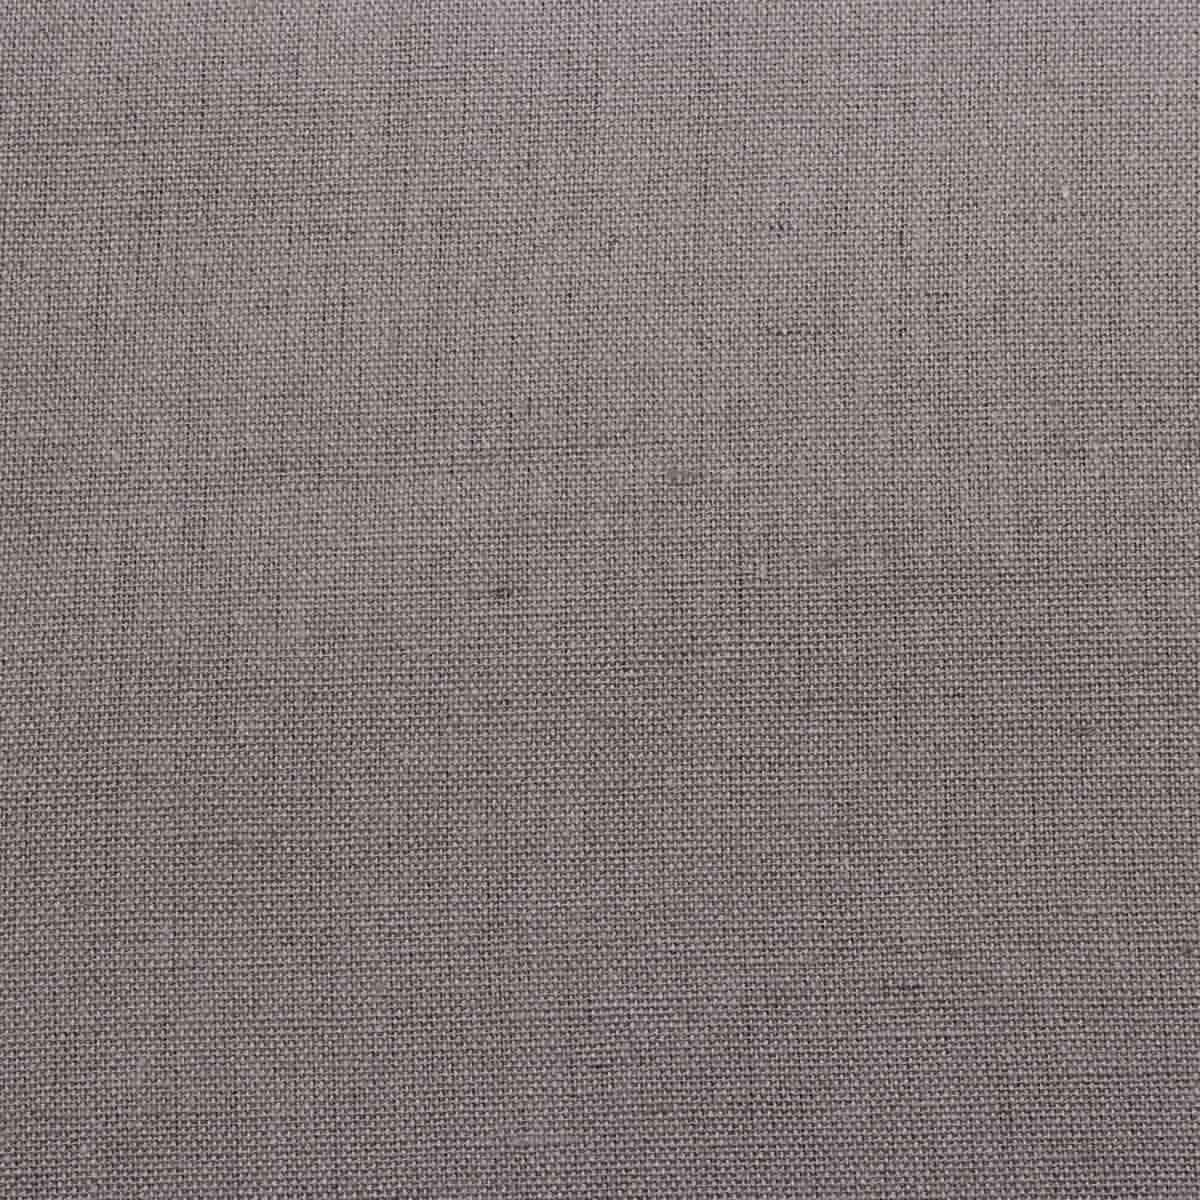 Dhabu Plain Cotton Light Grey (2)